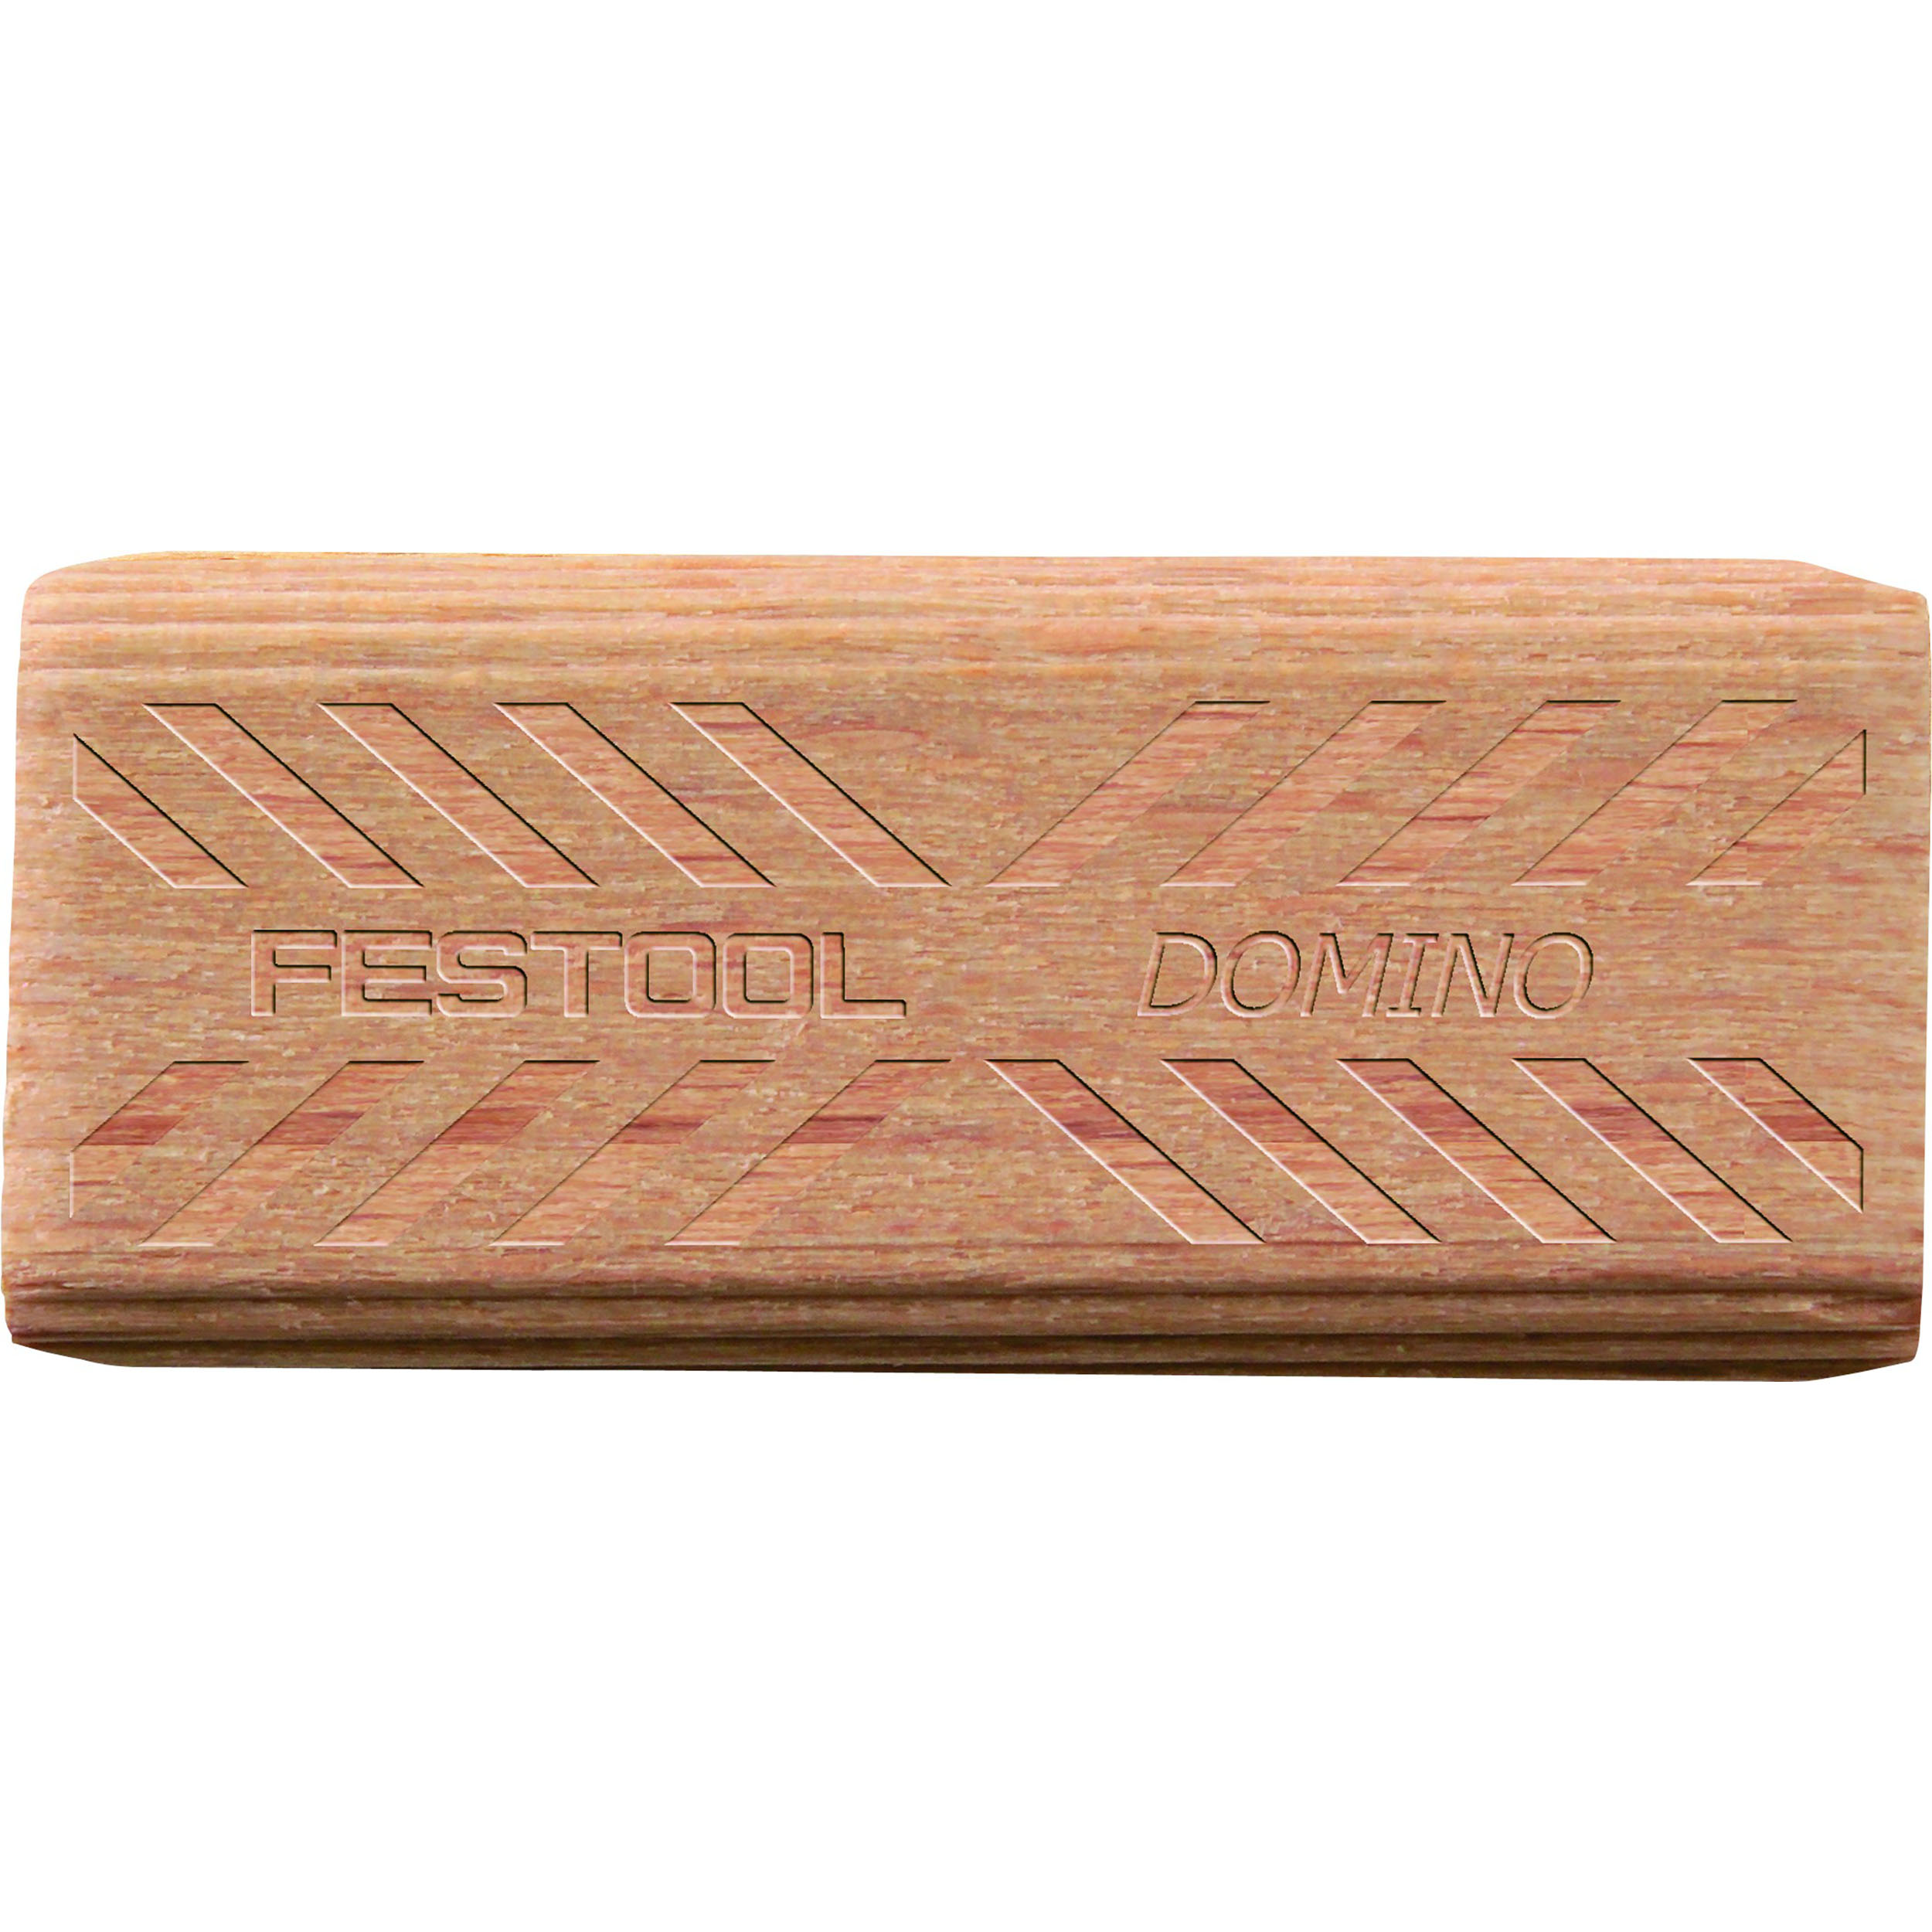 Festool Dominos, 8mm X 50mm, 600 Pieces